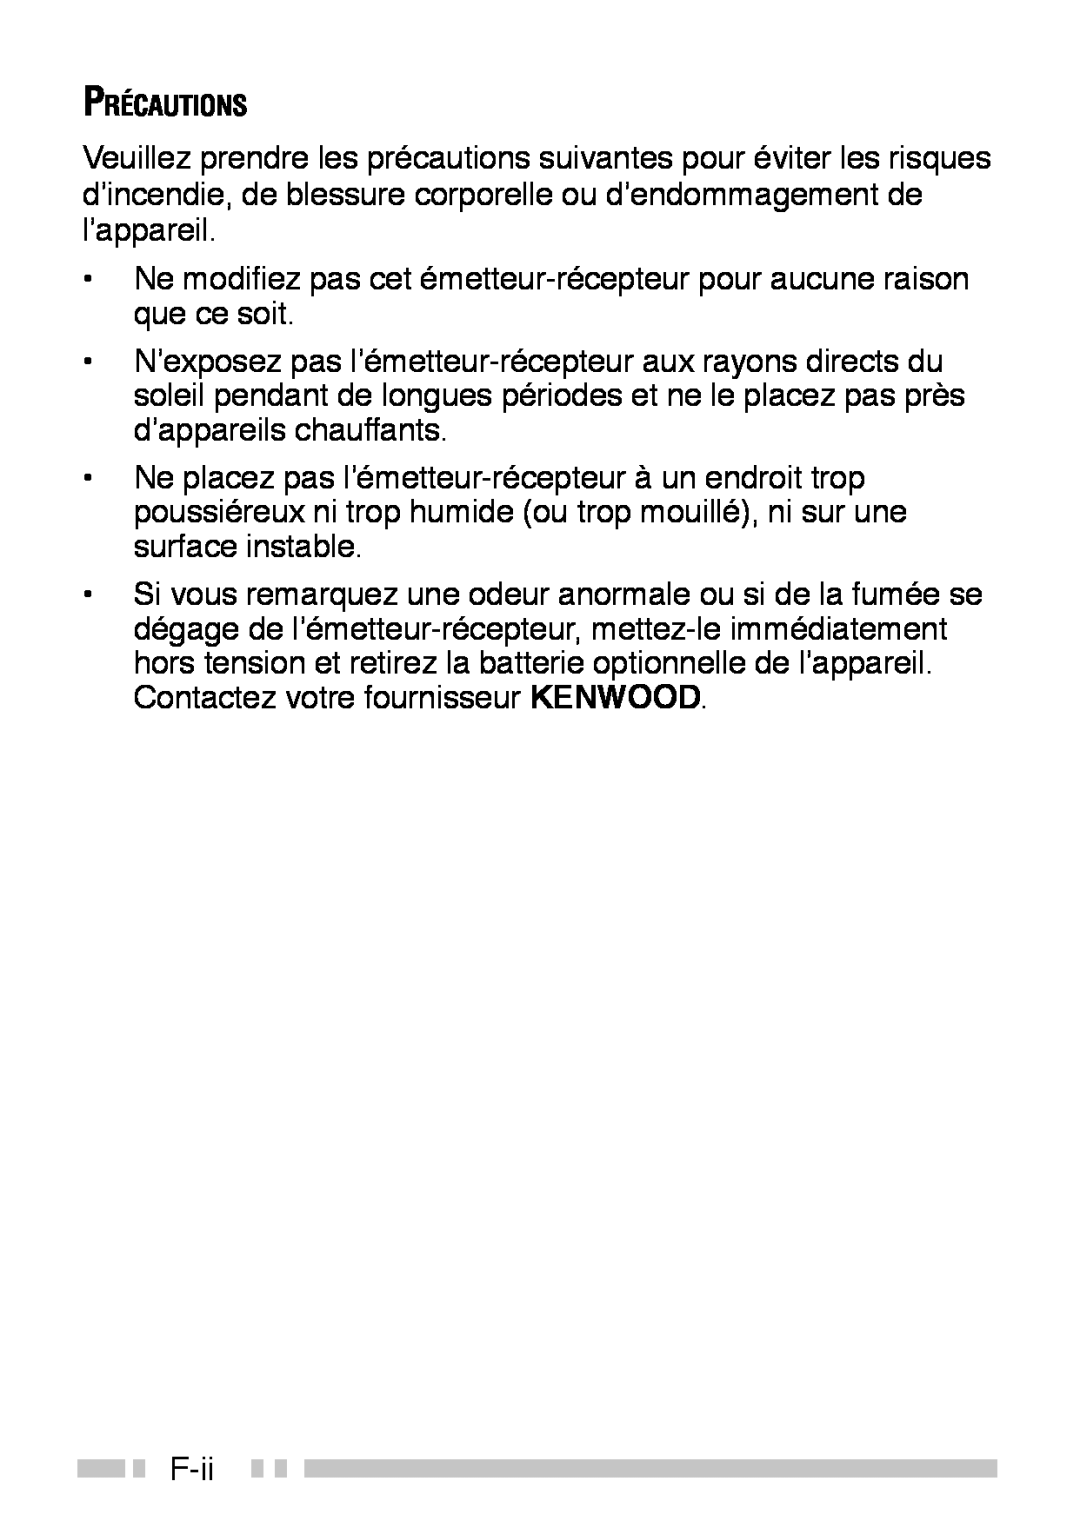 Kenwood TK-3160 instruction manual F-ii 